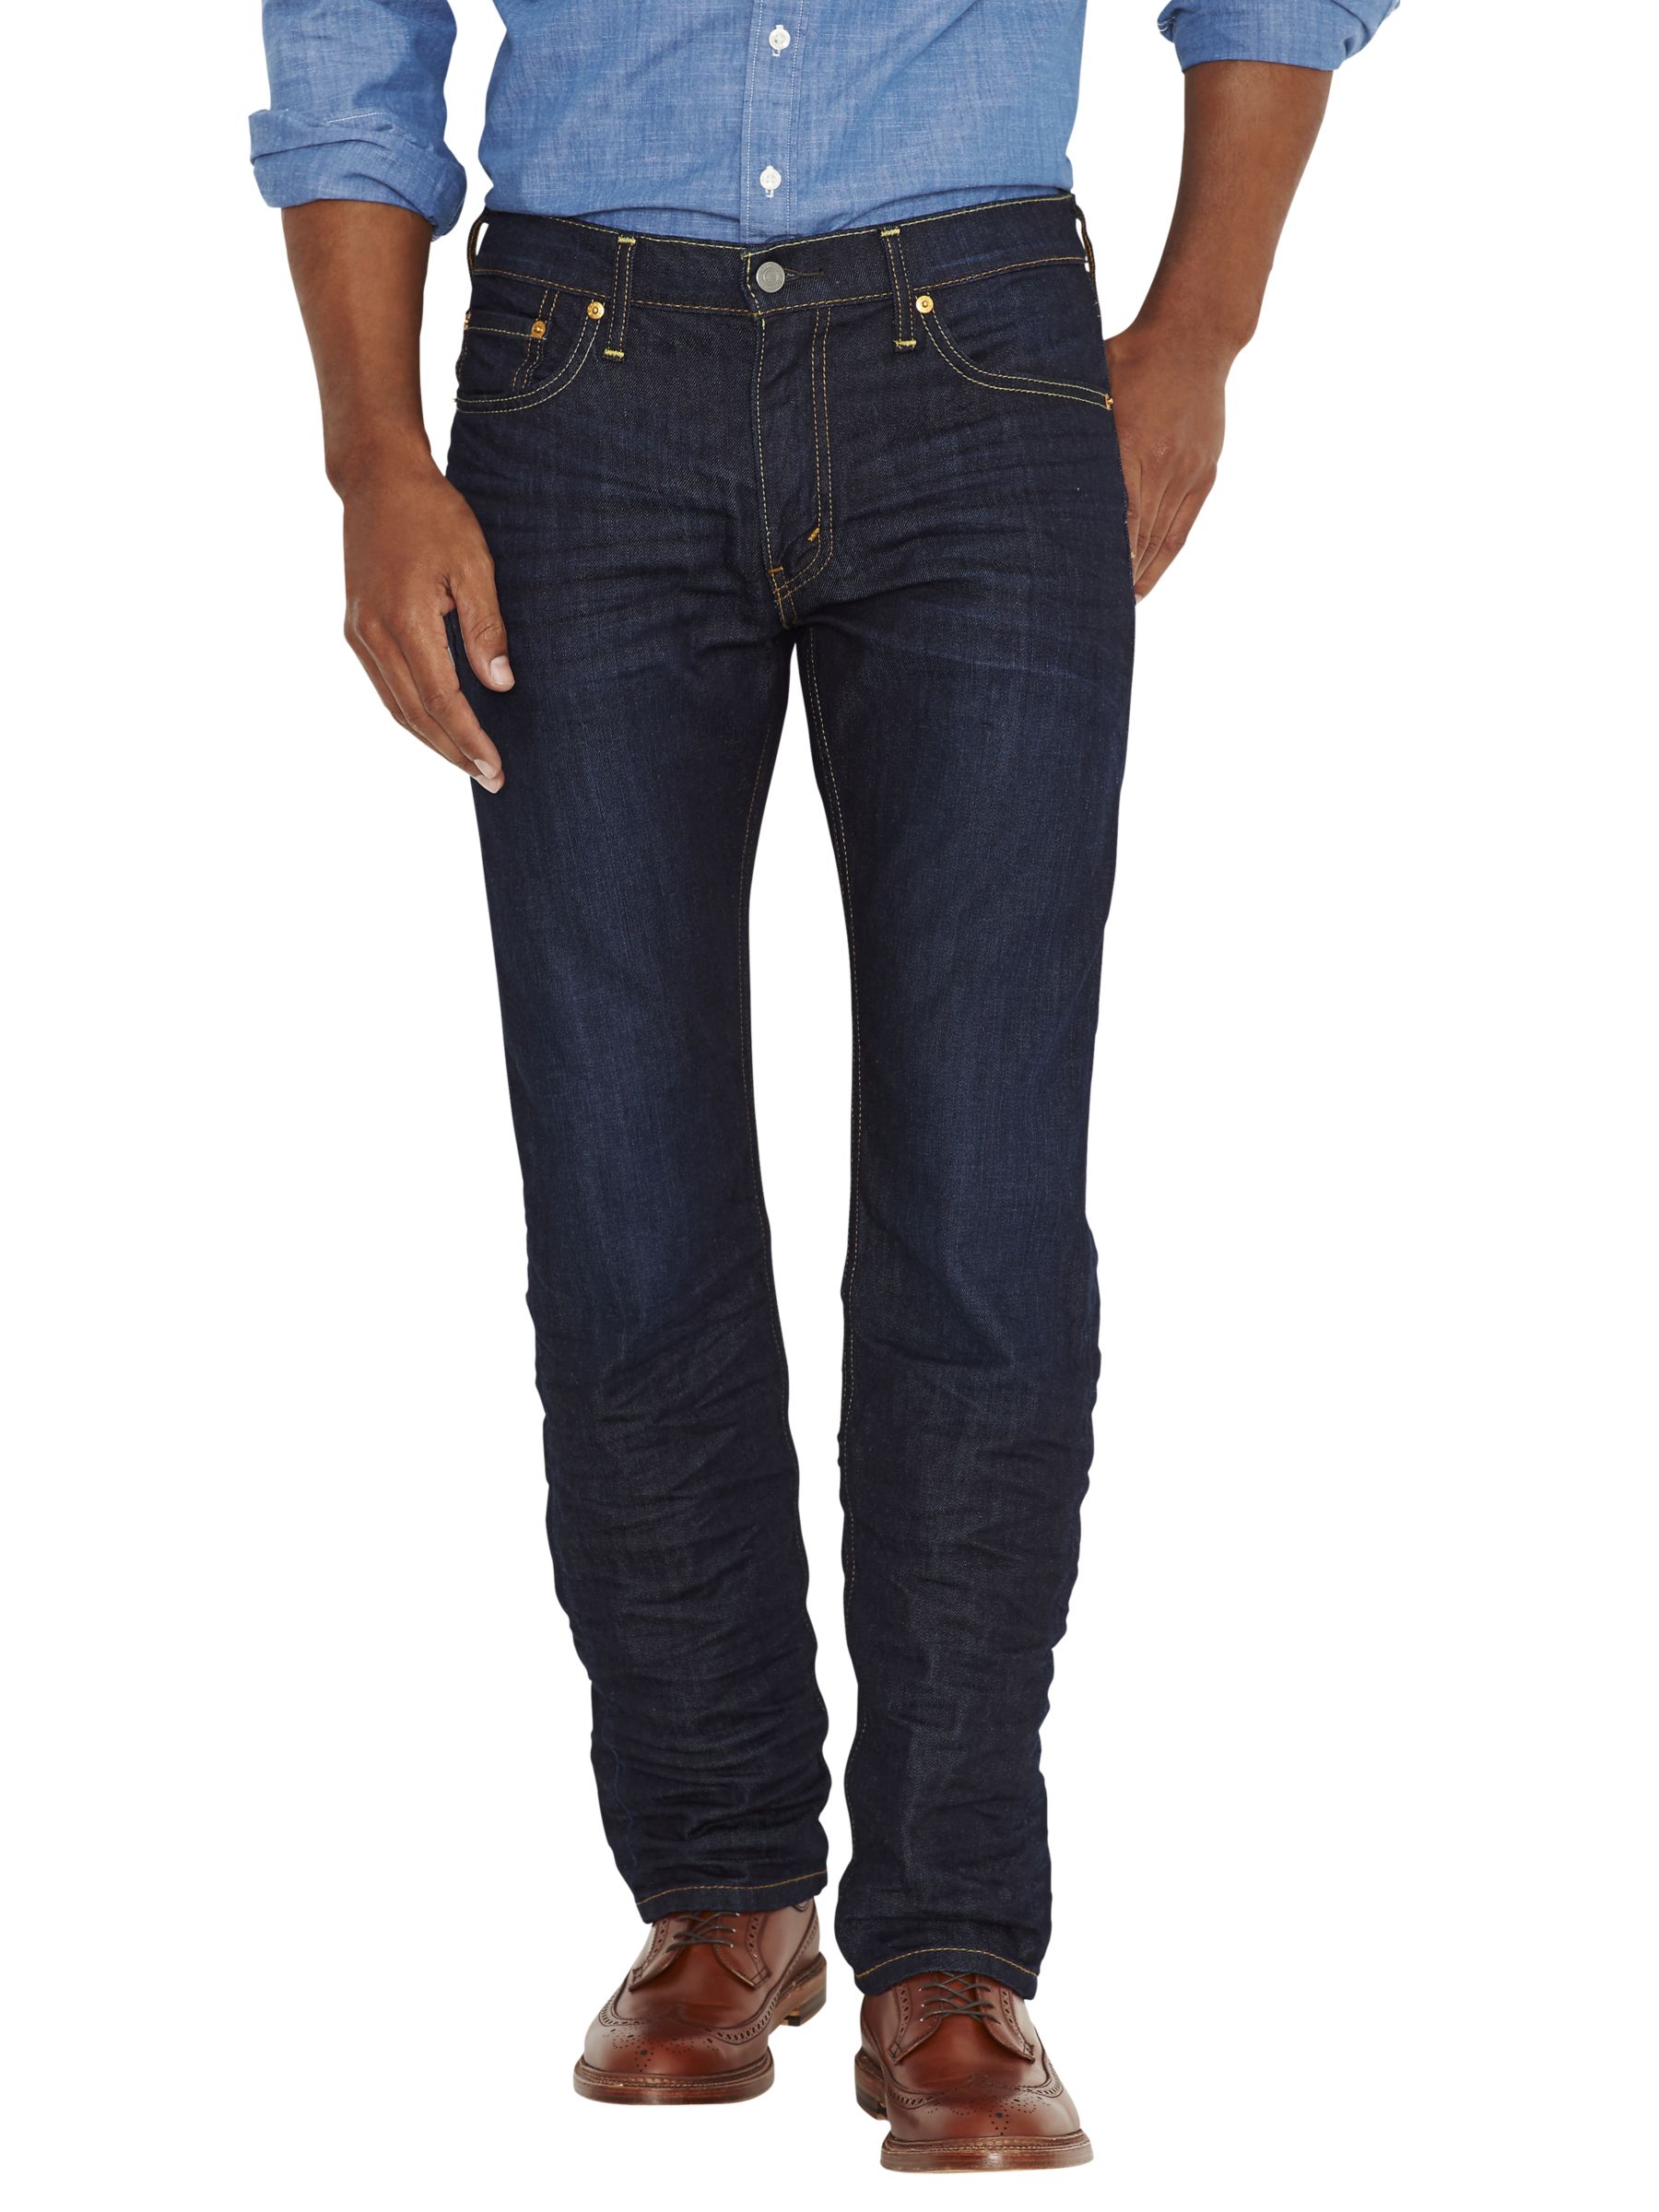 Levi's 504 Regular Straight Jeans, The 